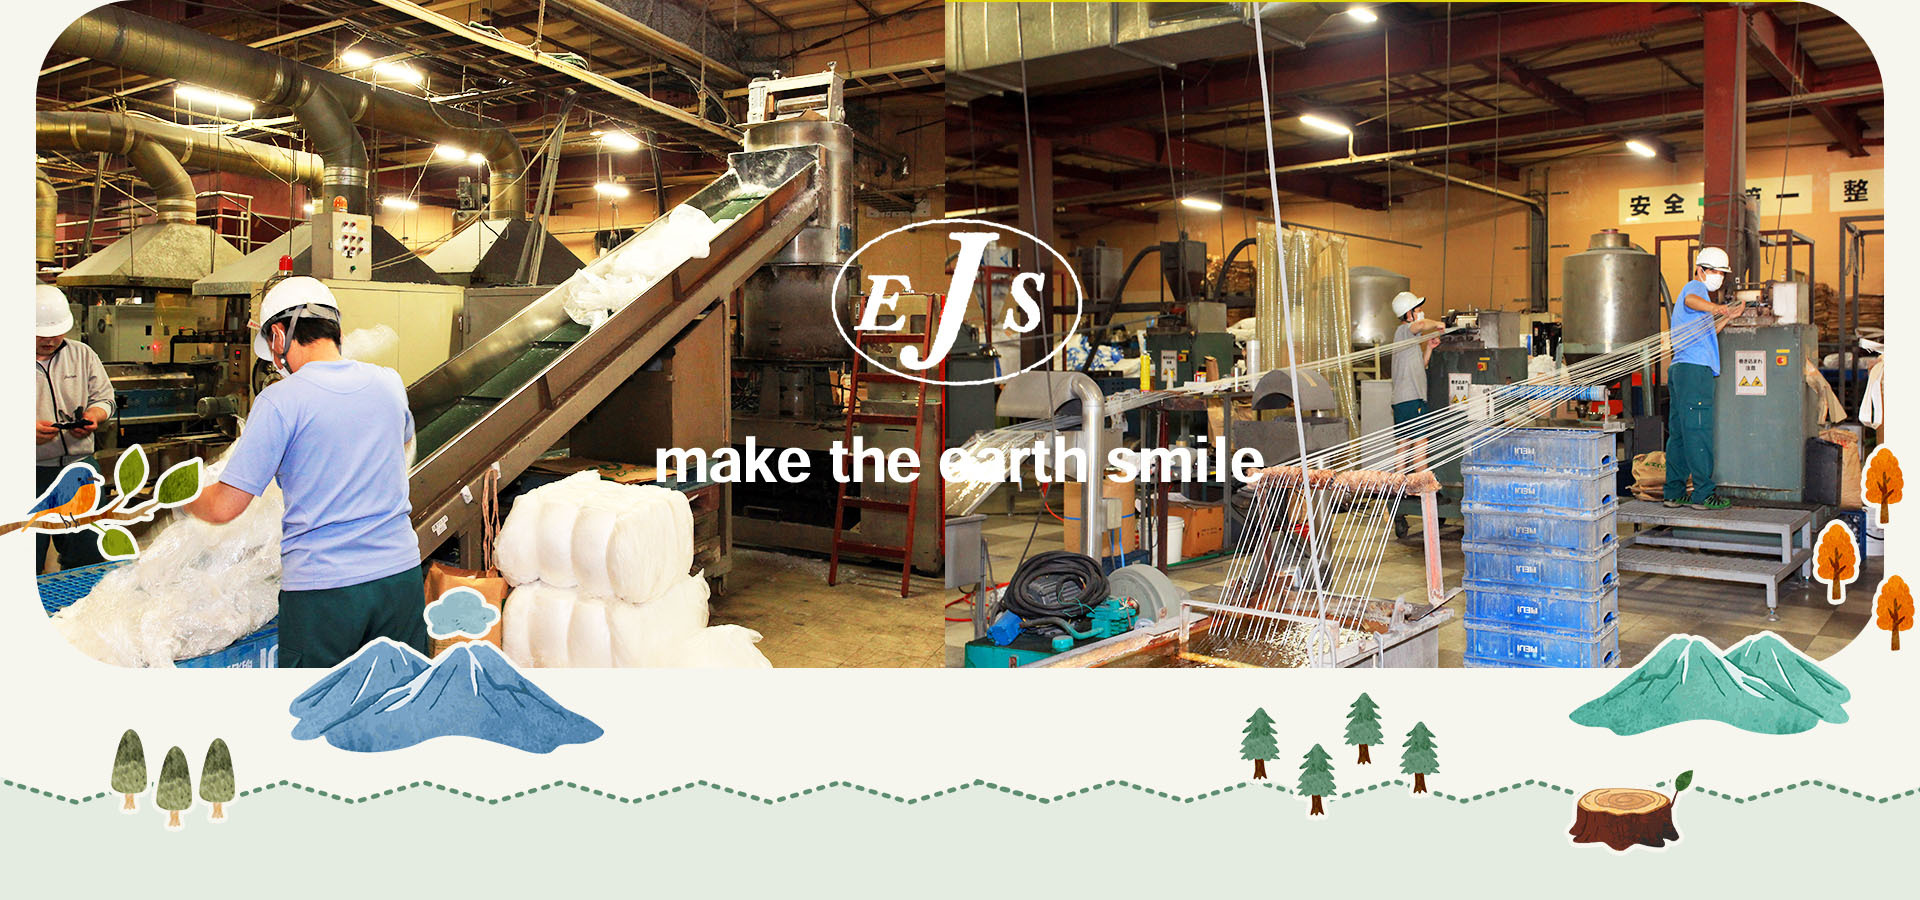 make the earth smile